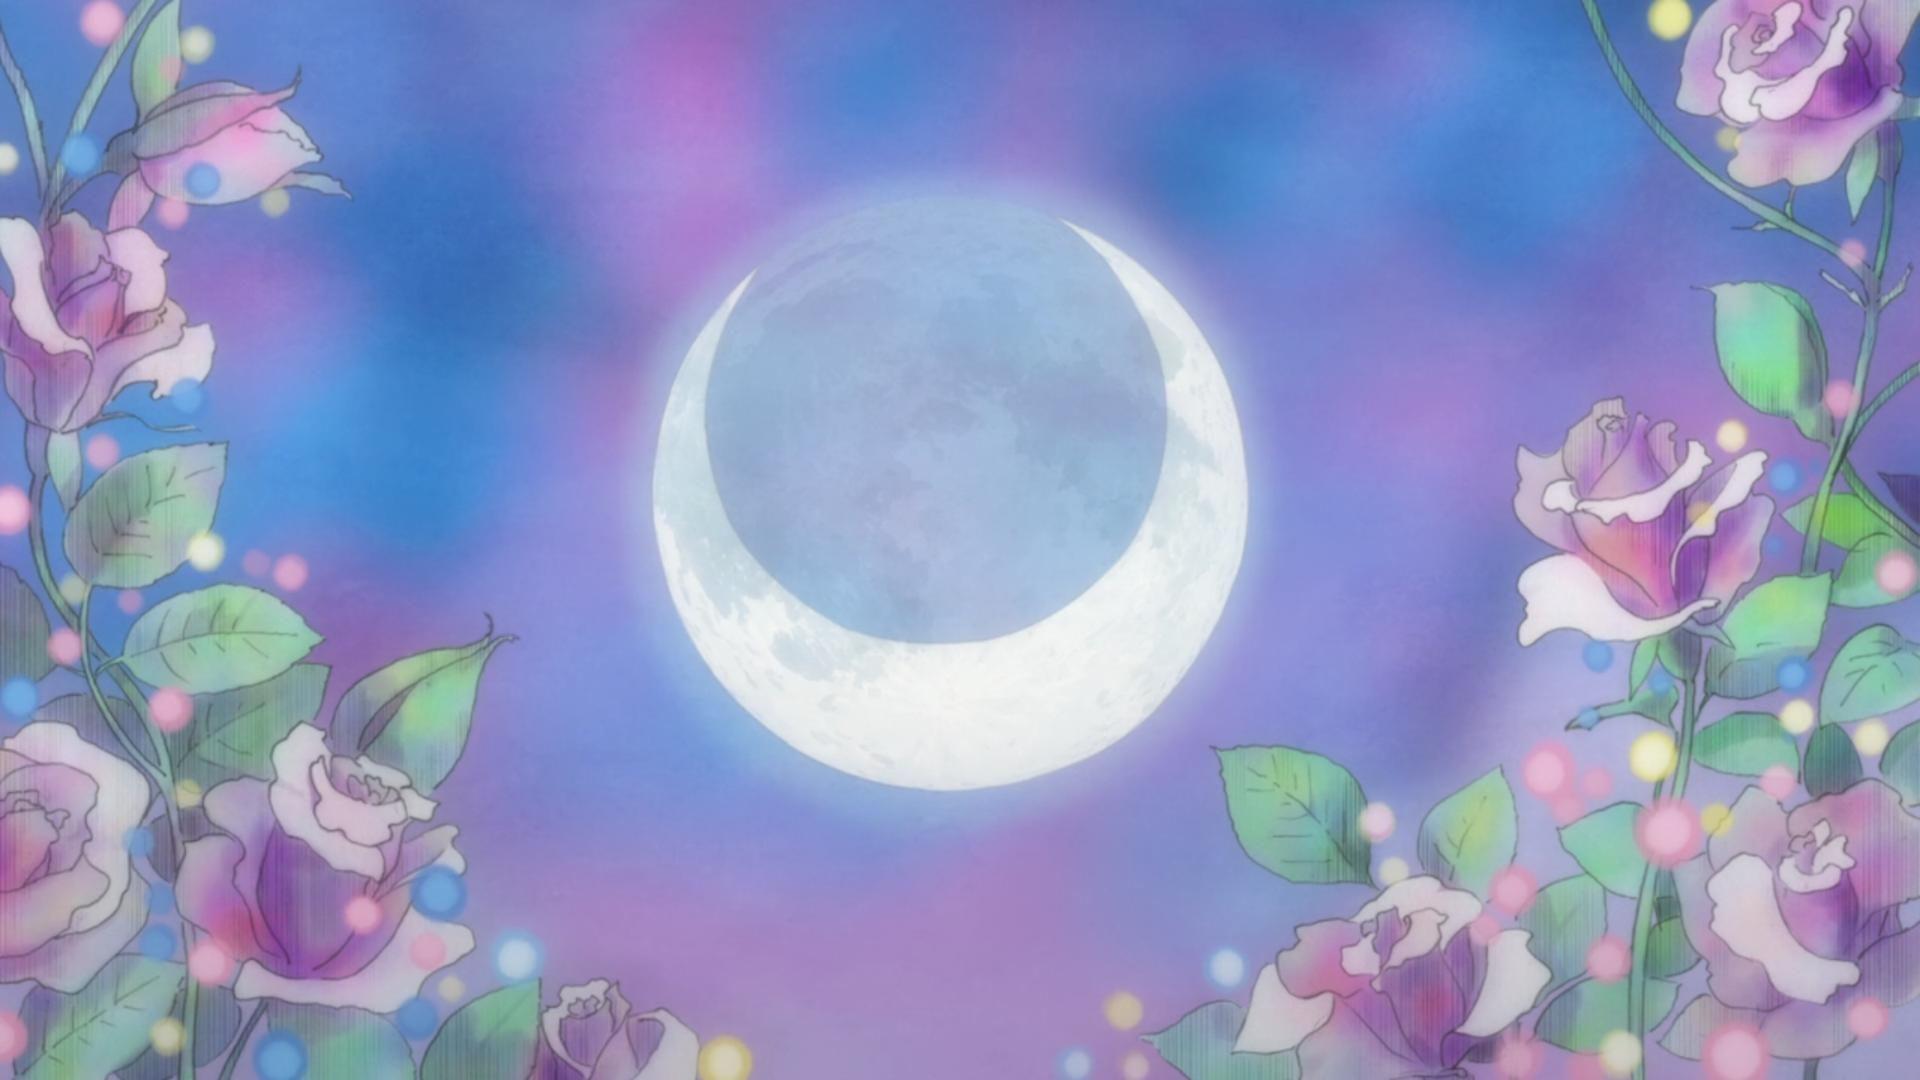 A crescent moon with a rose border - Sailor Moon